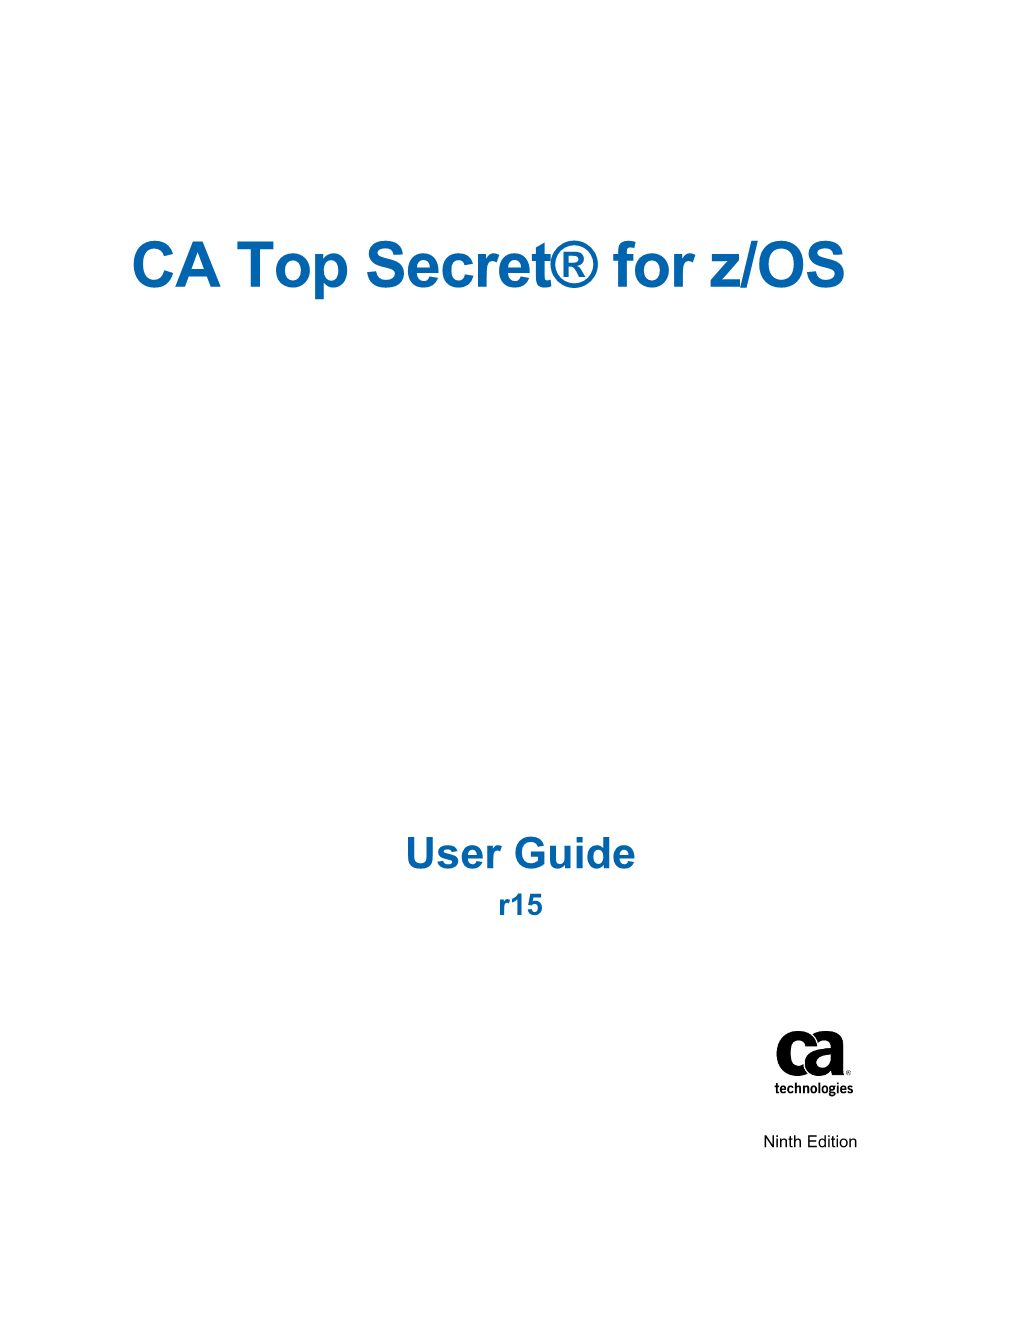 CA Top Secret for Z/OS User Guide